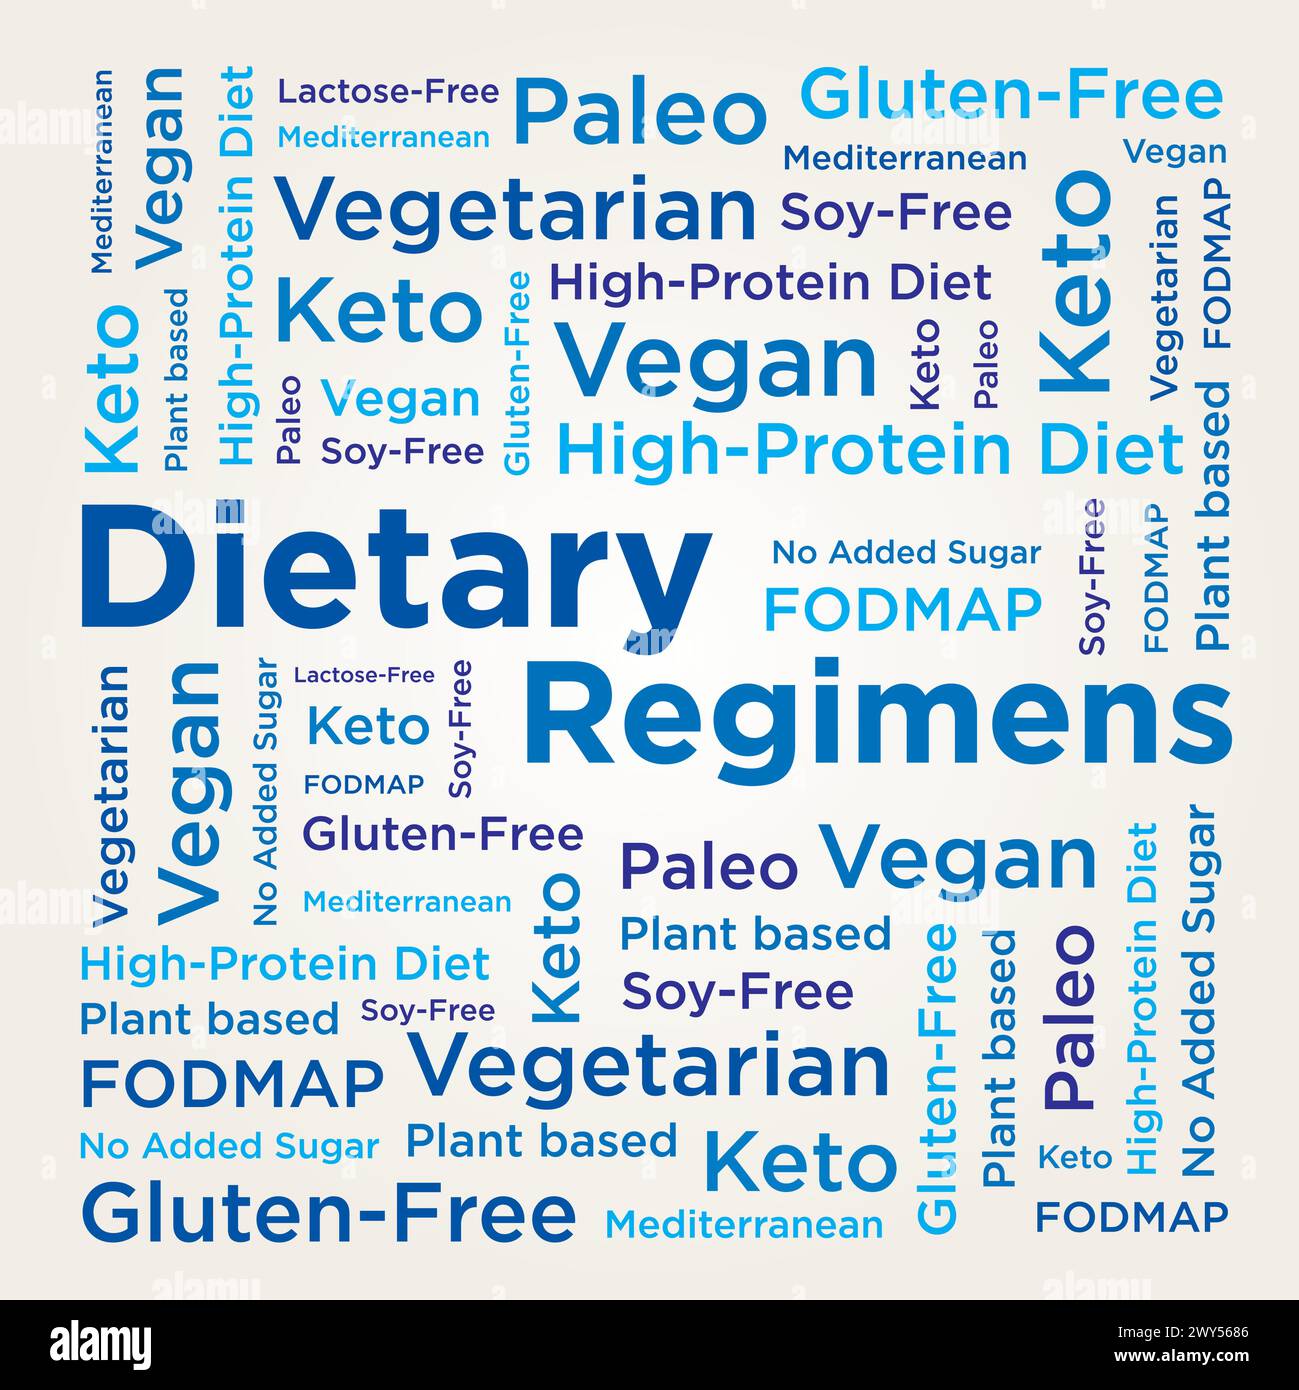 Dietary Regimens Various Diets Food Intolerances Preferences Choices Health Nutrition Word Cloud Illustration Vegan Protein Keto Paleo FODMAP Stock Vector